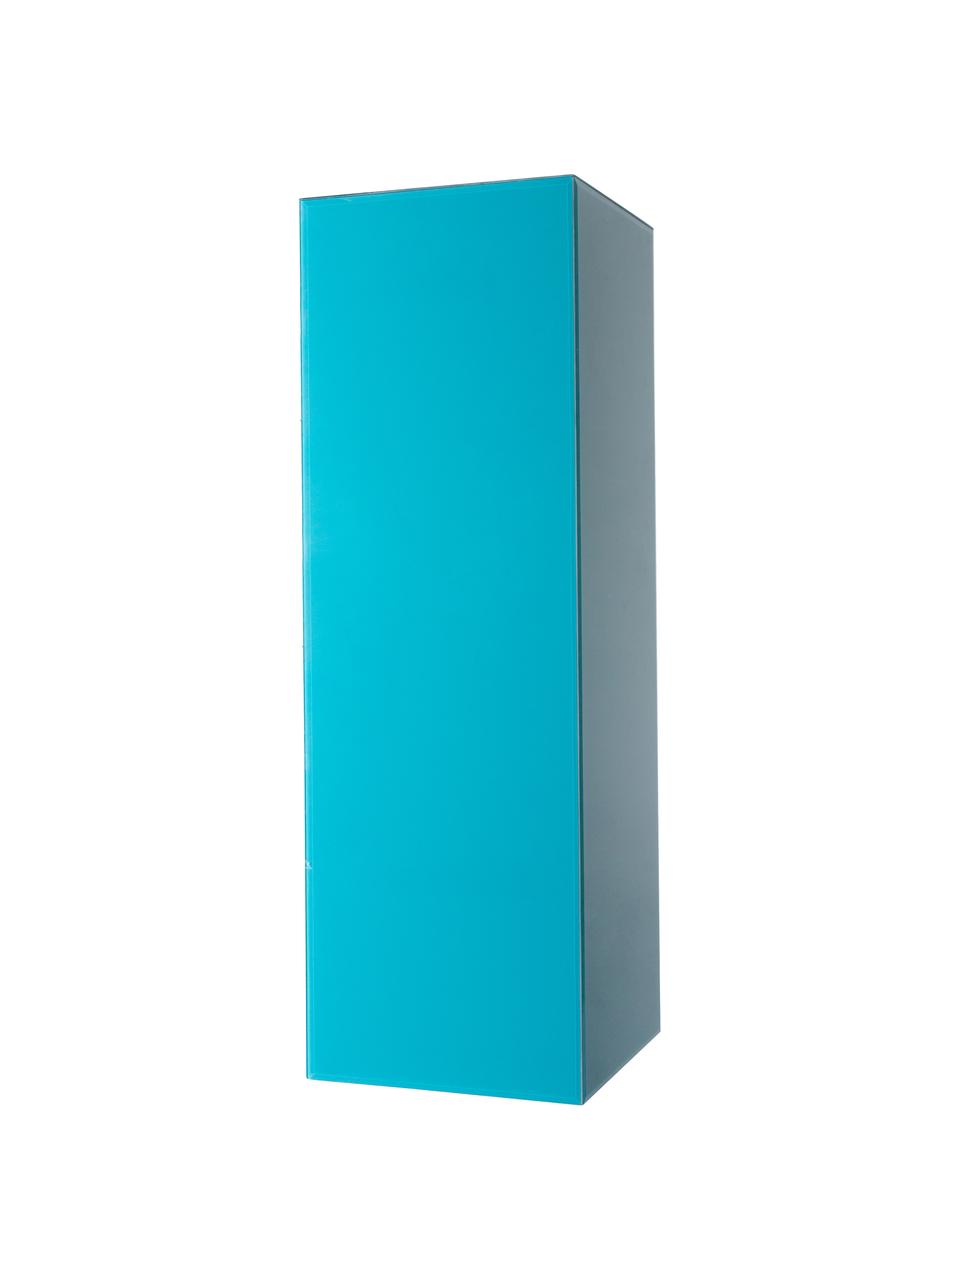 Socle verre bleu Pillar, Bleu, larg. 28 x haut. 90 cm